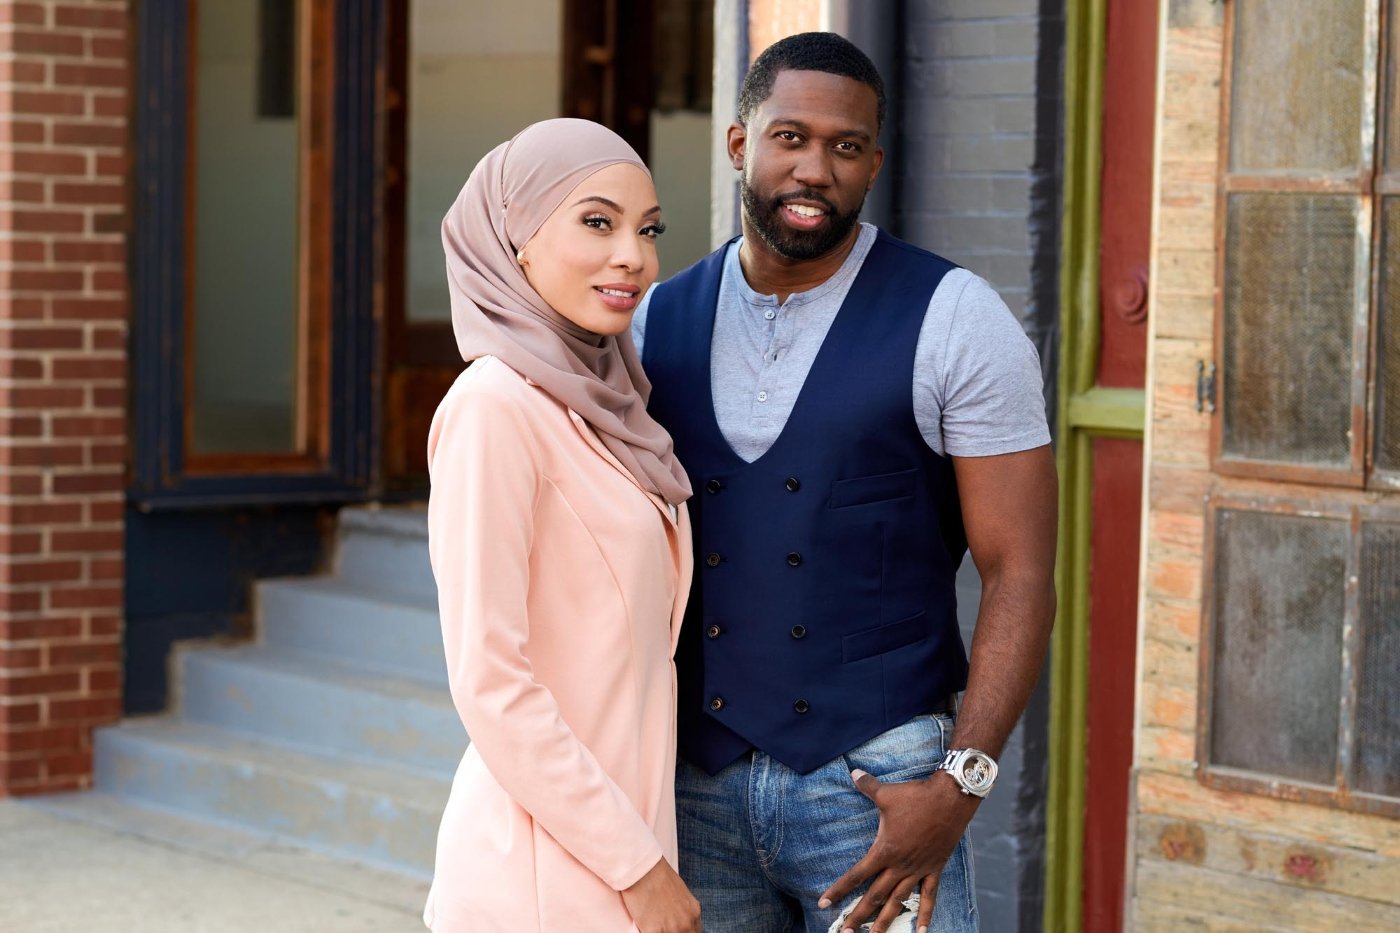 90 Day Fiancé Season 9 New Couple Alert: Who Are Shaeeda and Bilal?